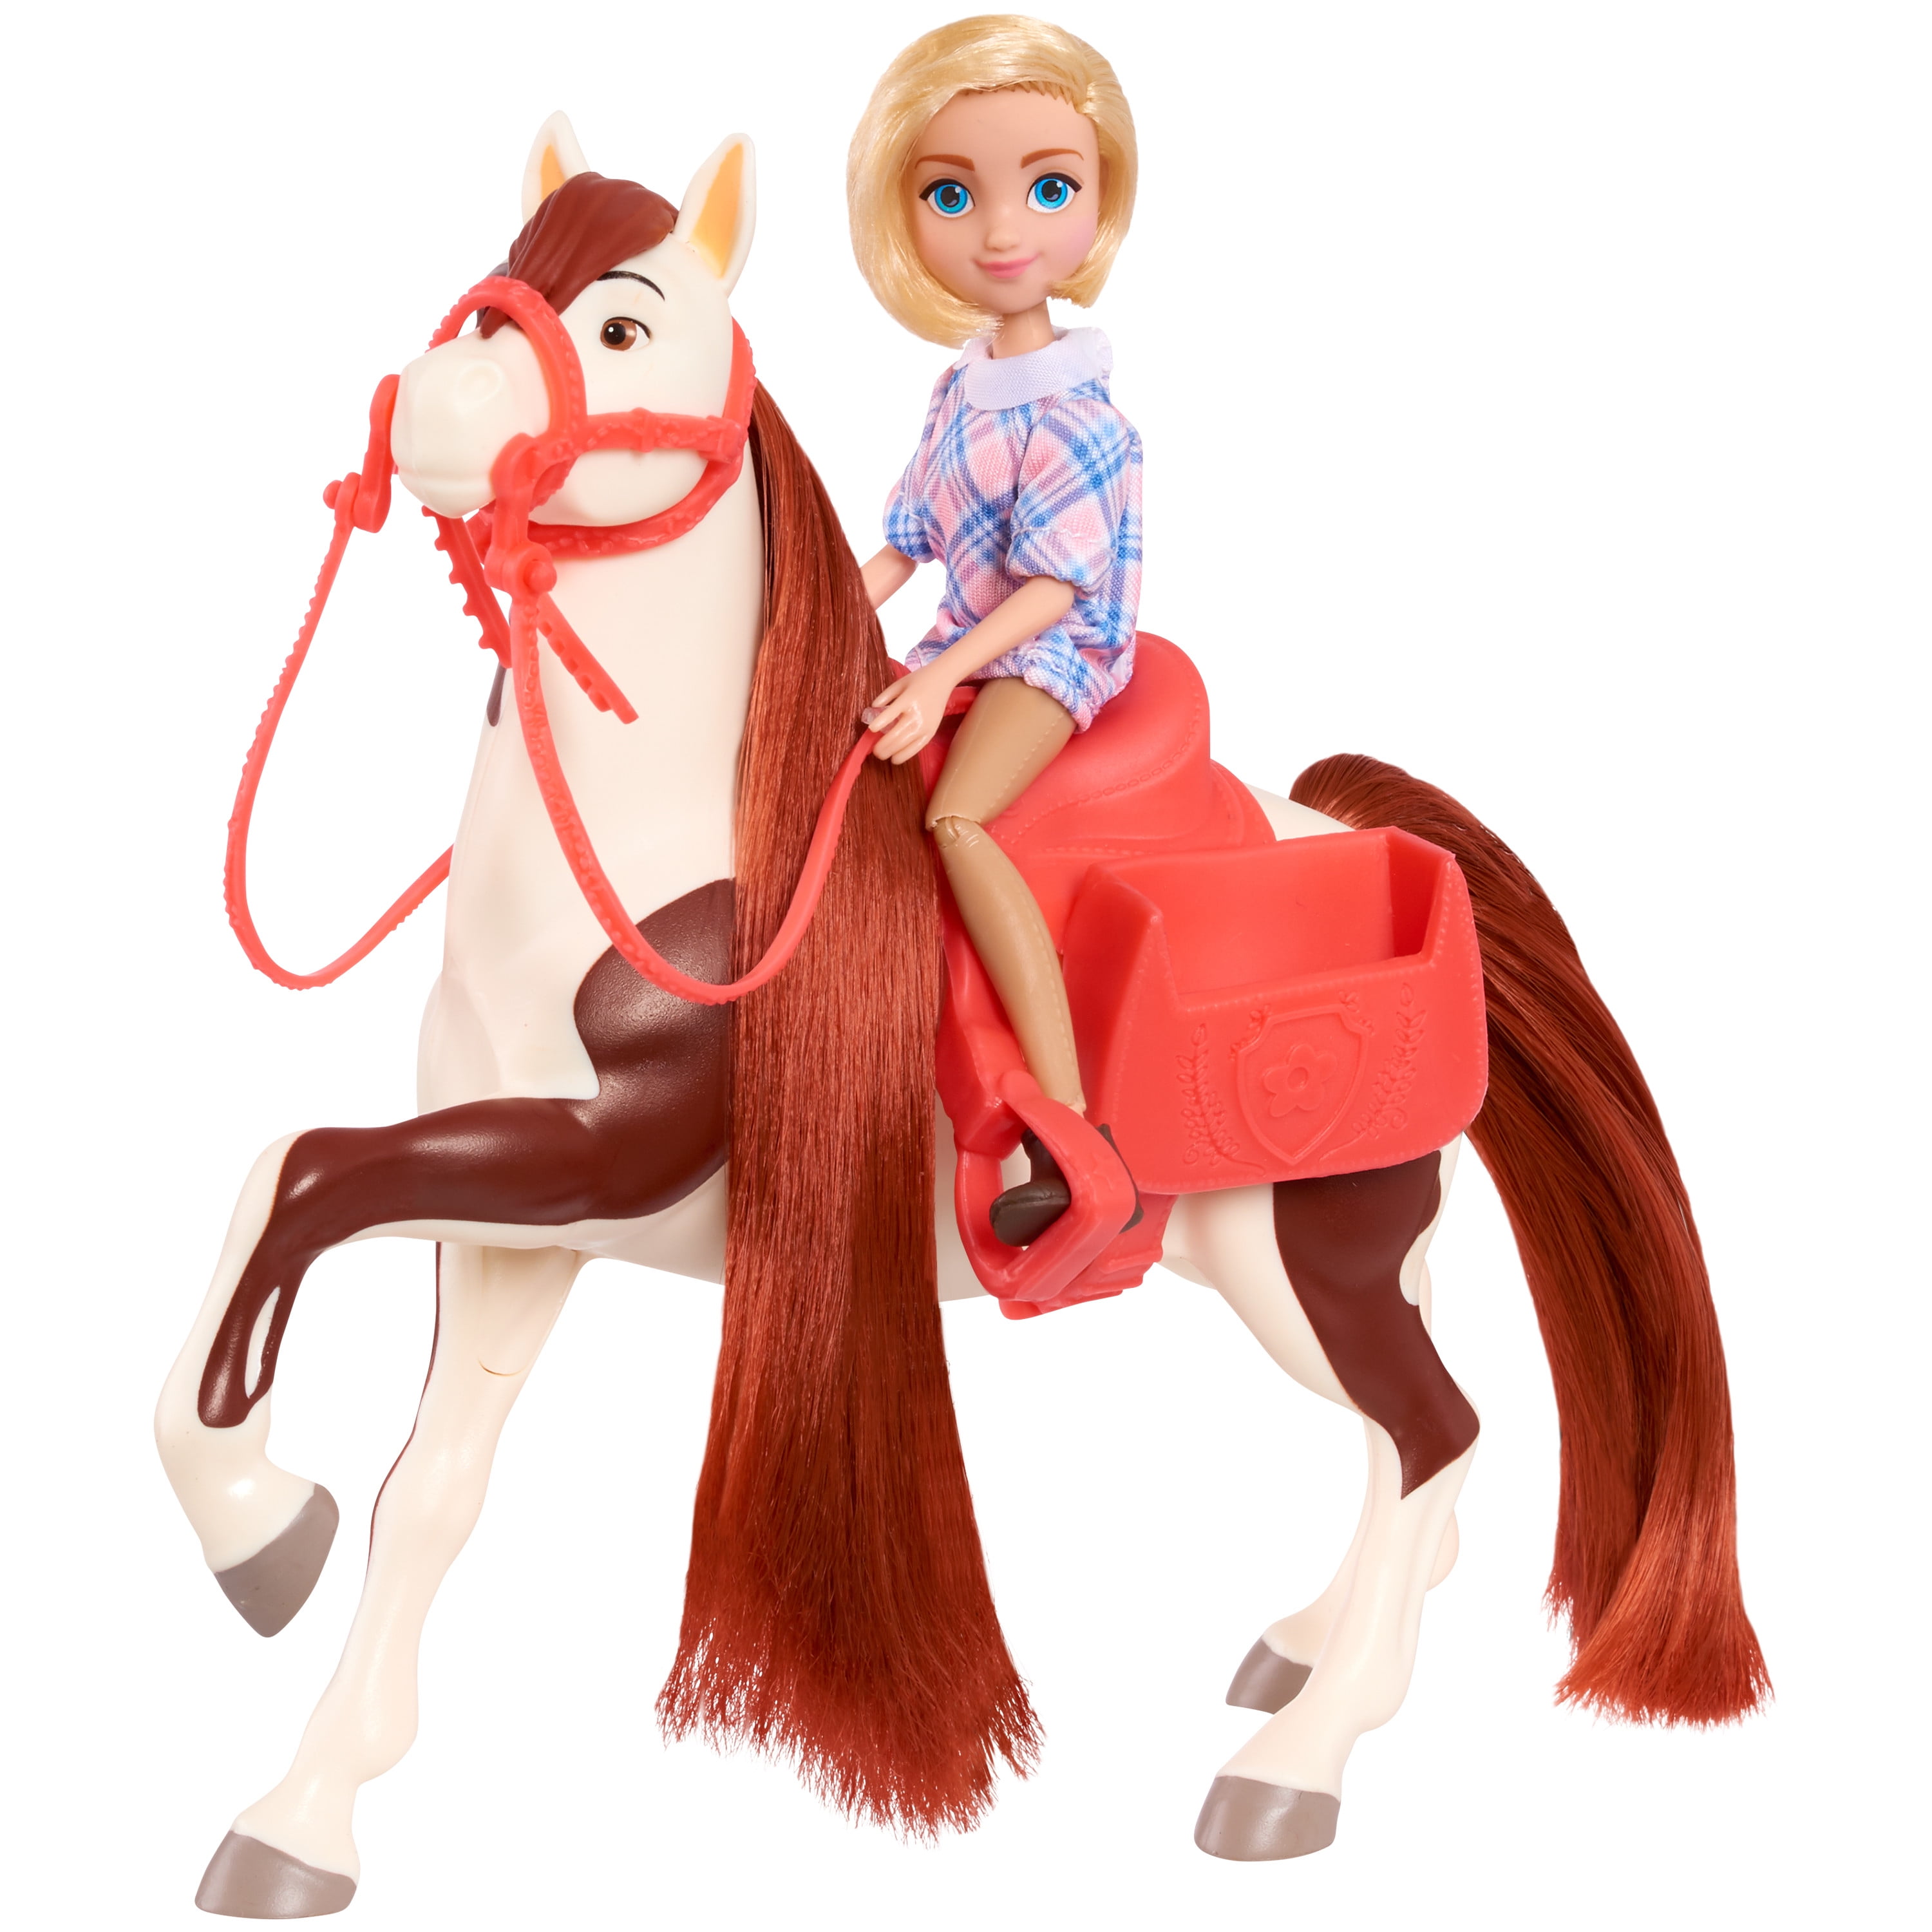 Details about   Spirit horse Riding Free Netflix Boomerang Plush Stuffed Horse Doll 